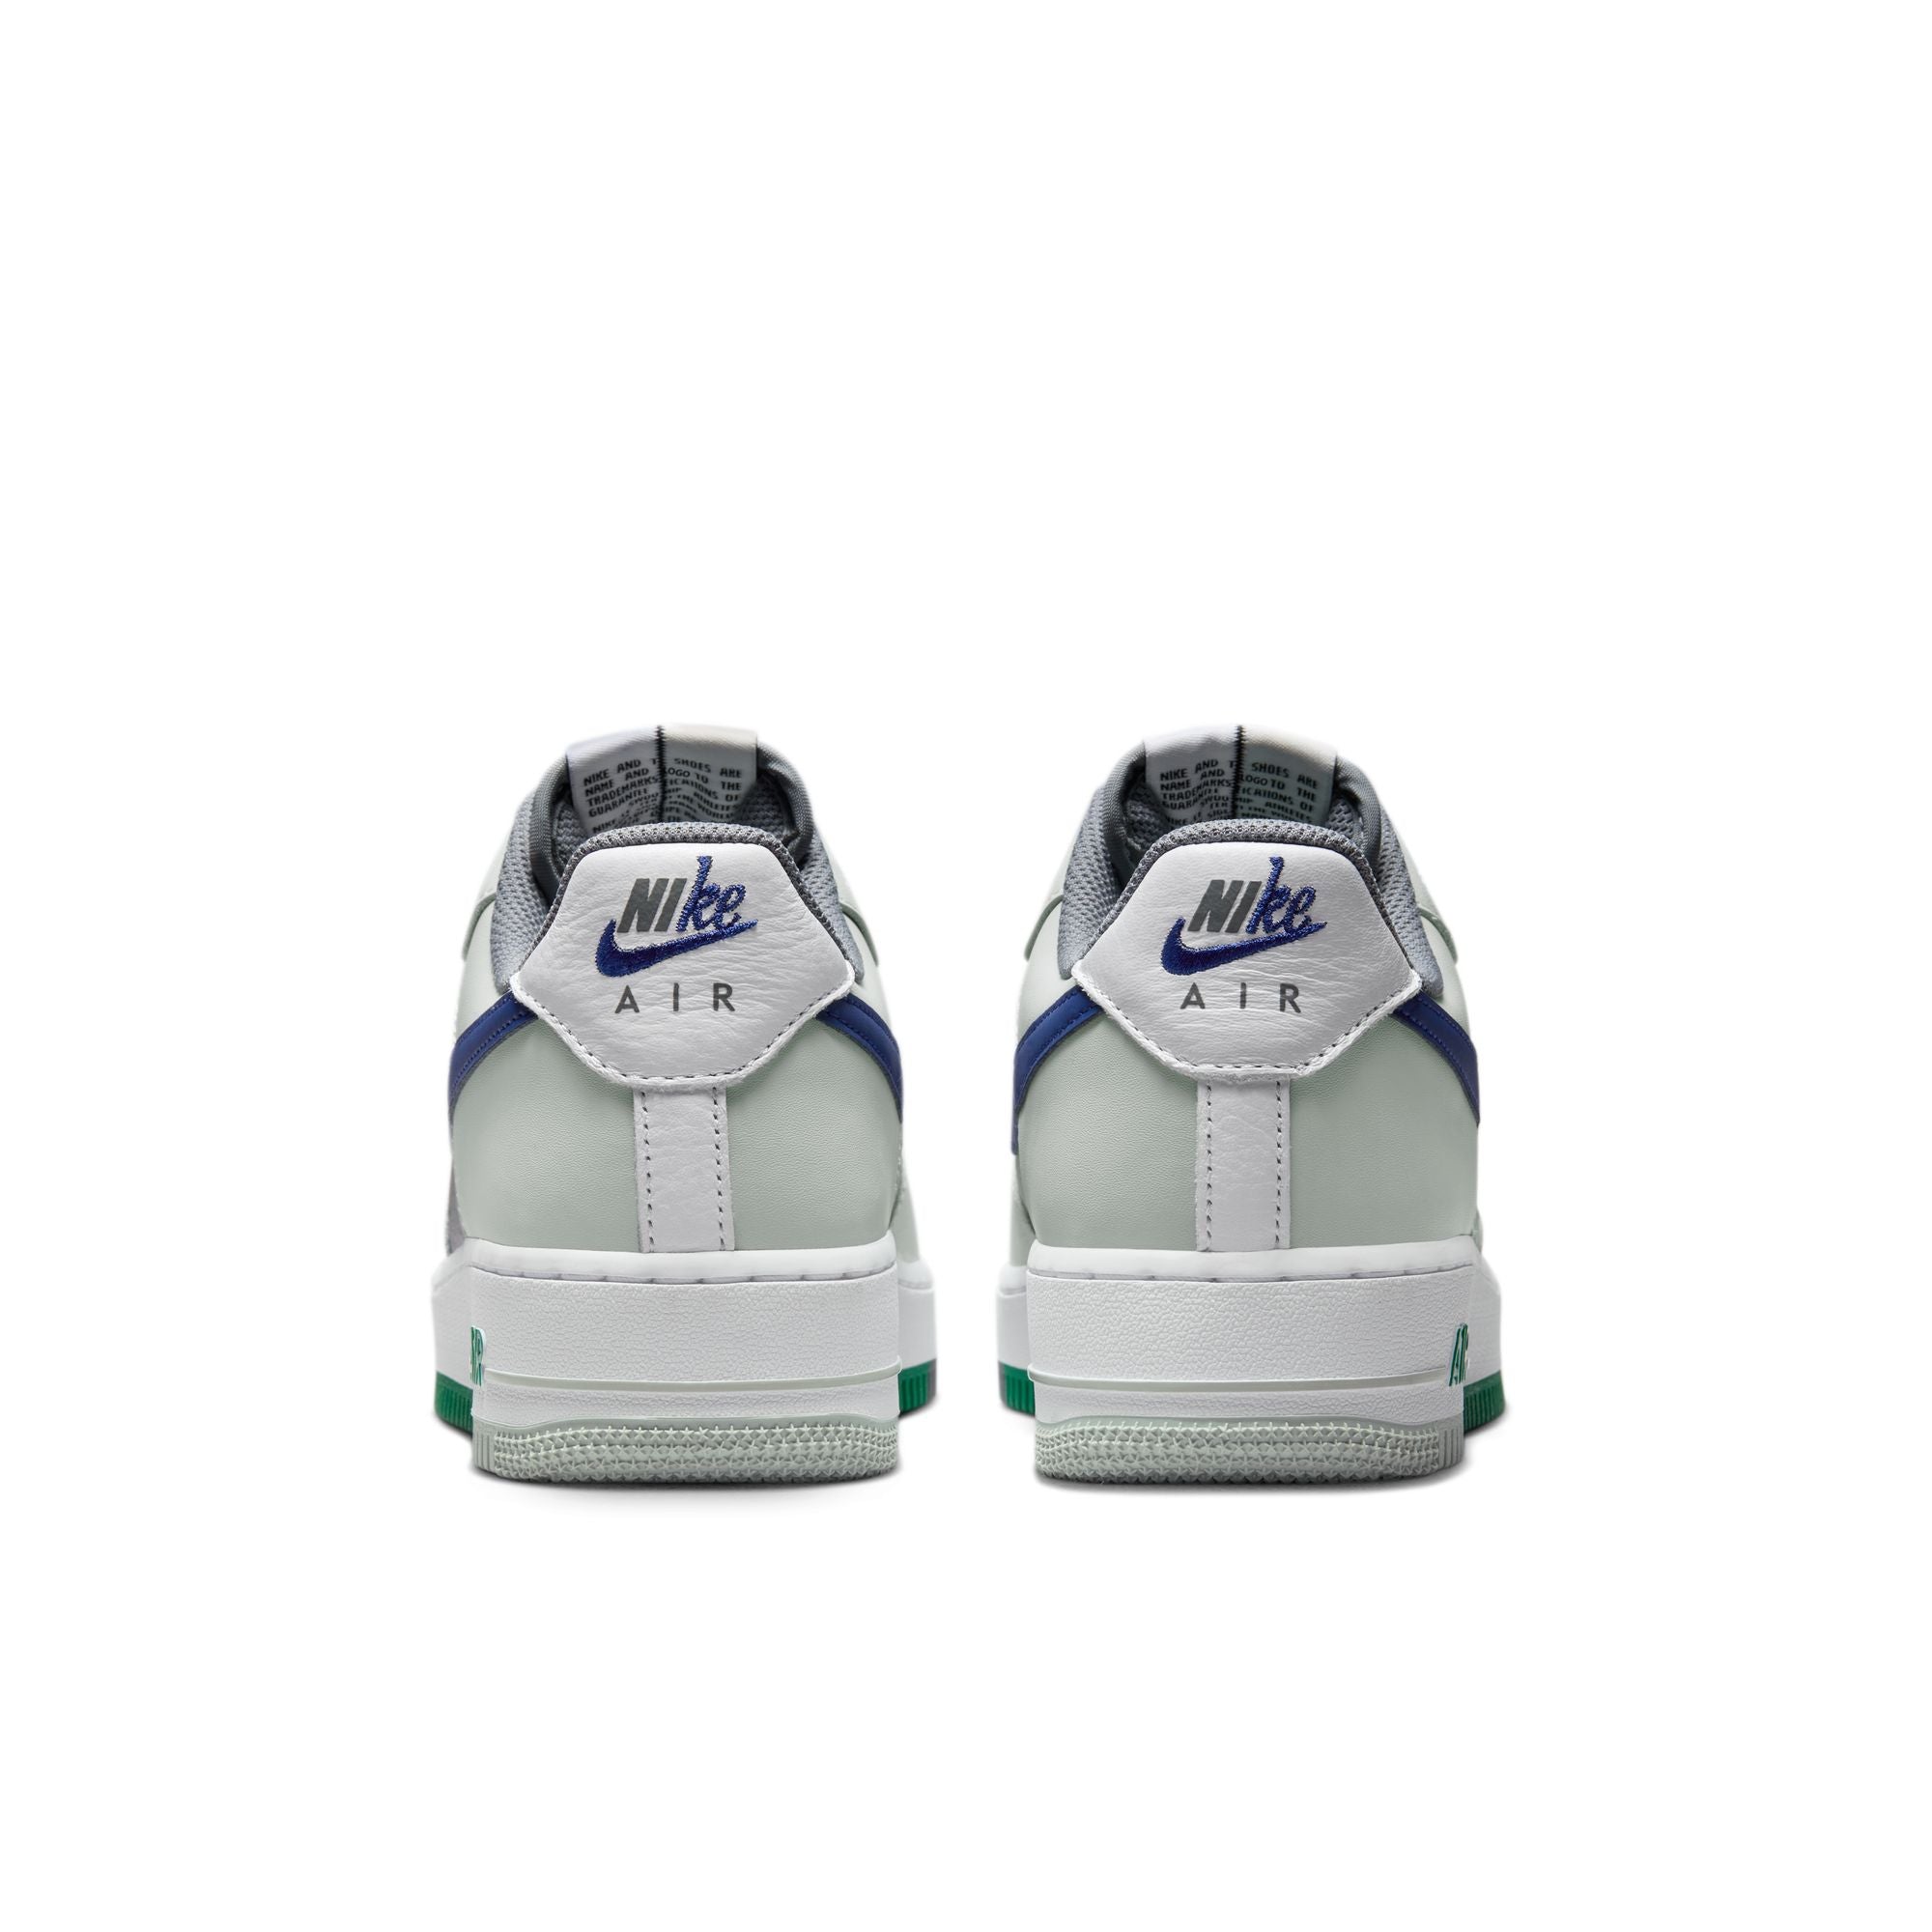 Men's shoes Nike Air Force 1 '07 Lv8 Light Silver/ Black-Light Silver-White